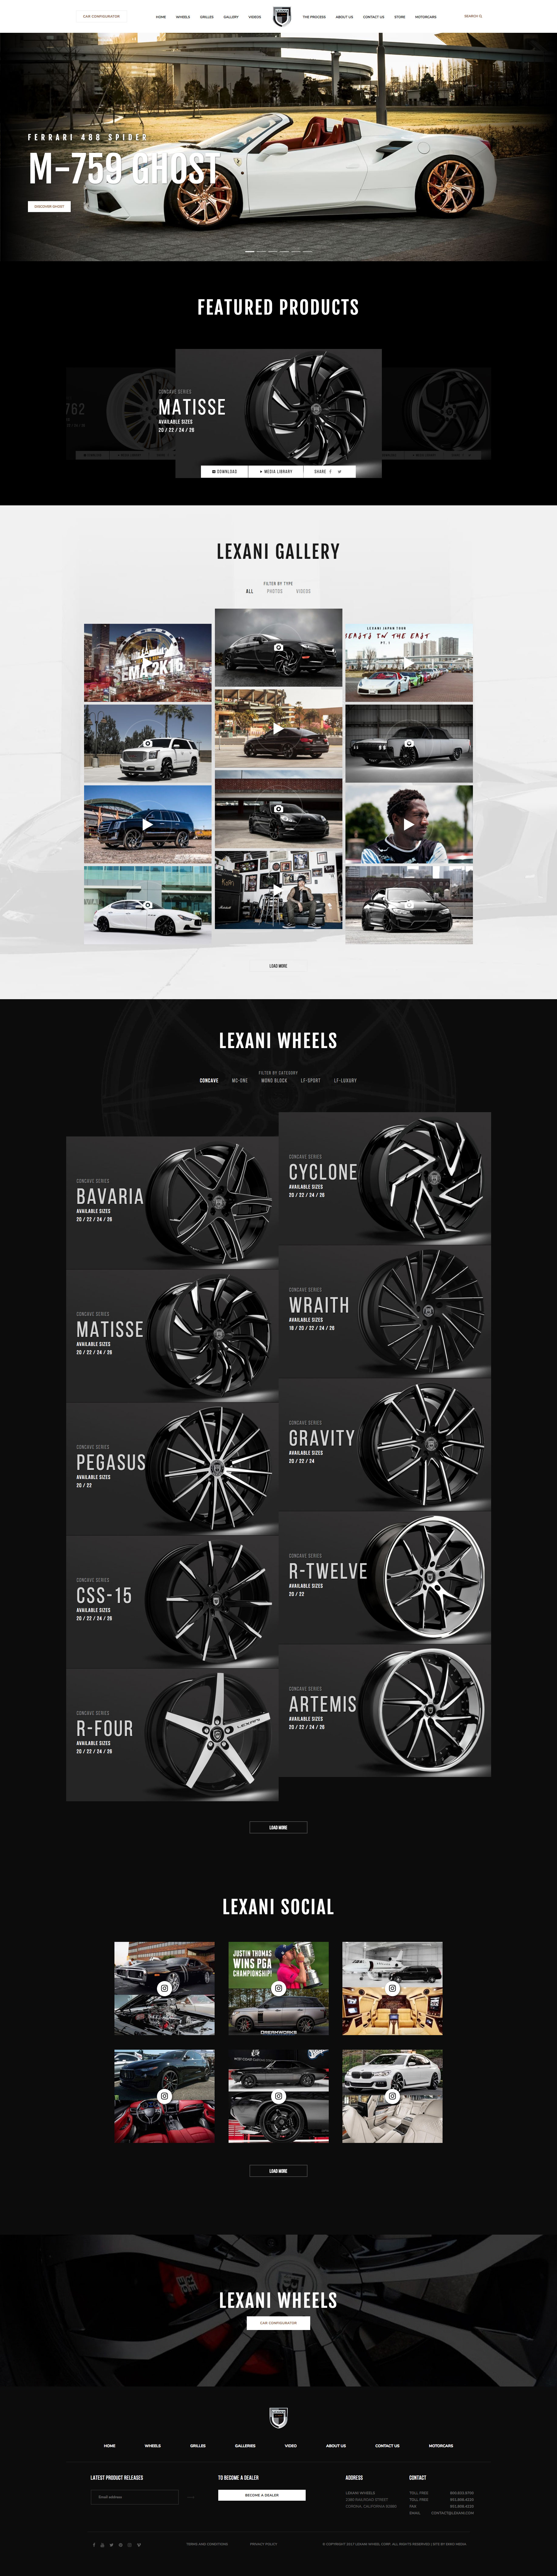 Lexani Wheels Interactive website, Ekko Media web design, video production and marketing